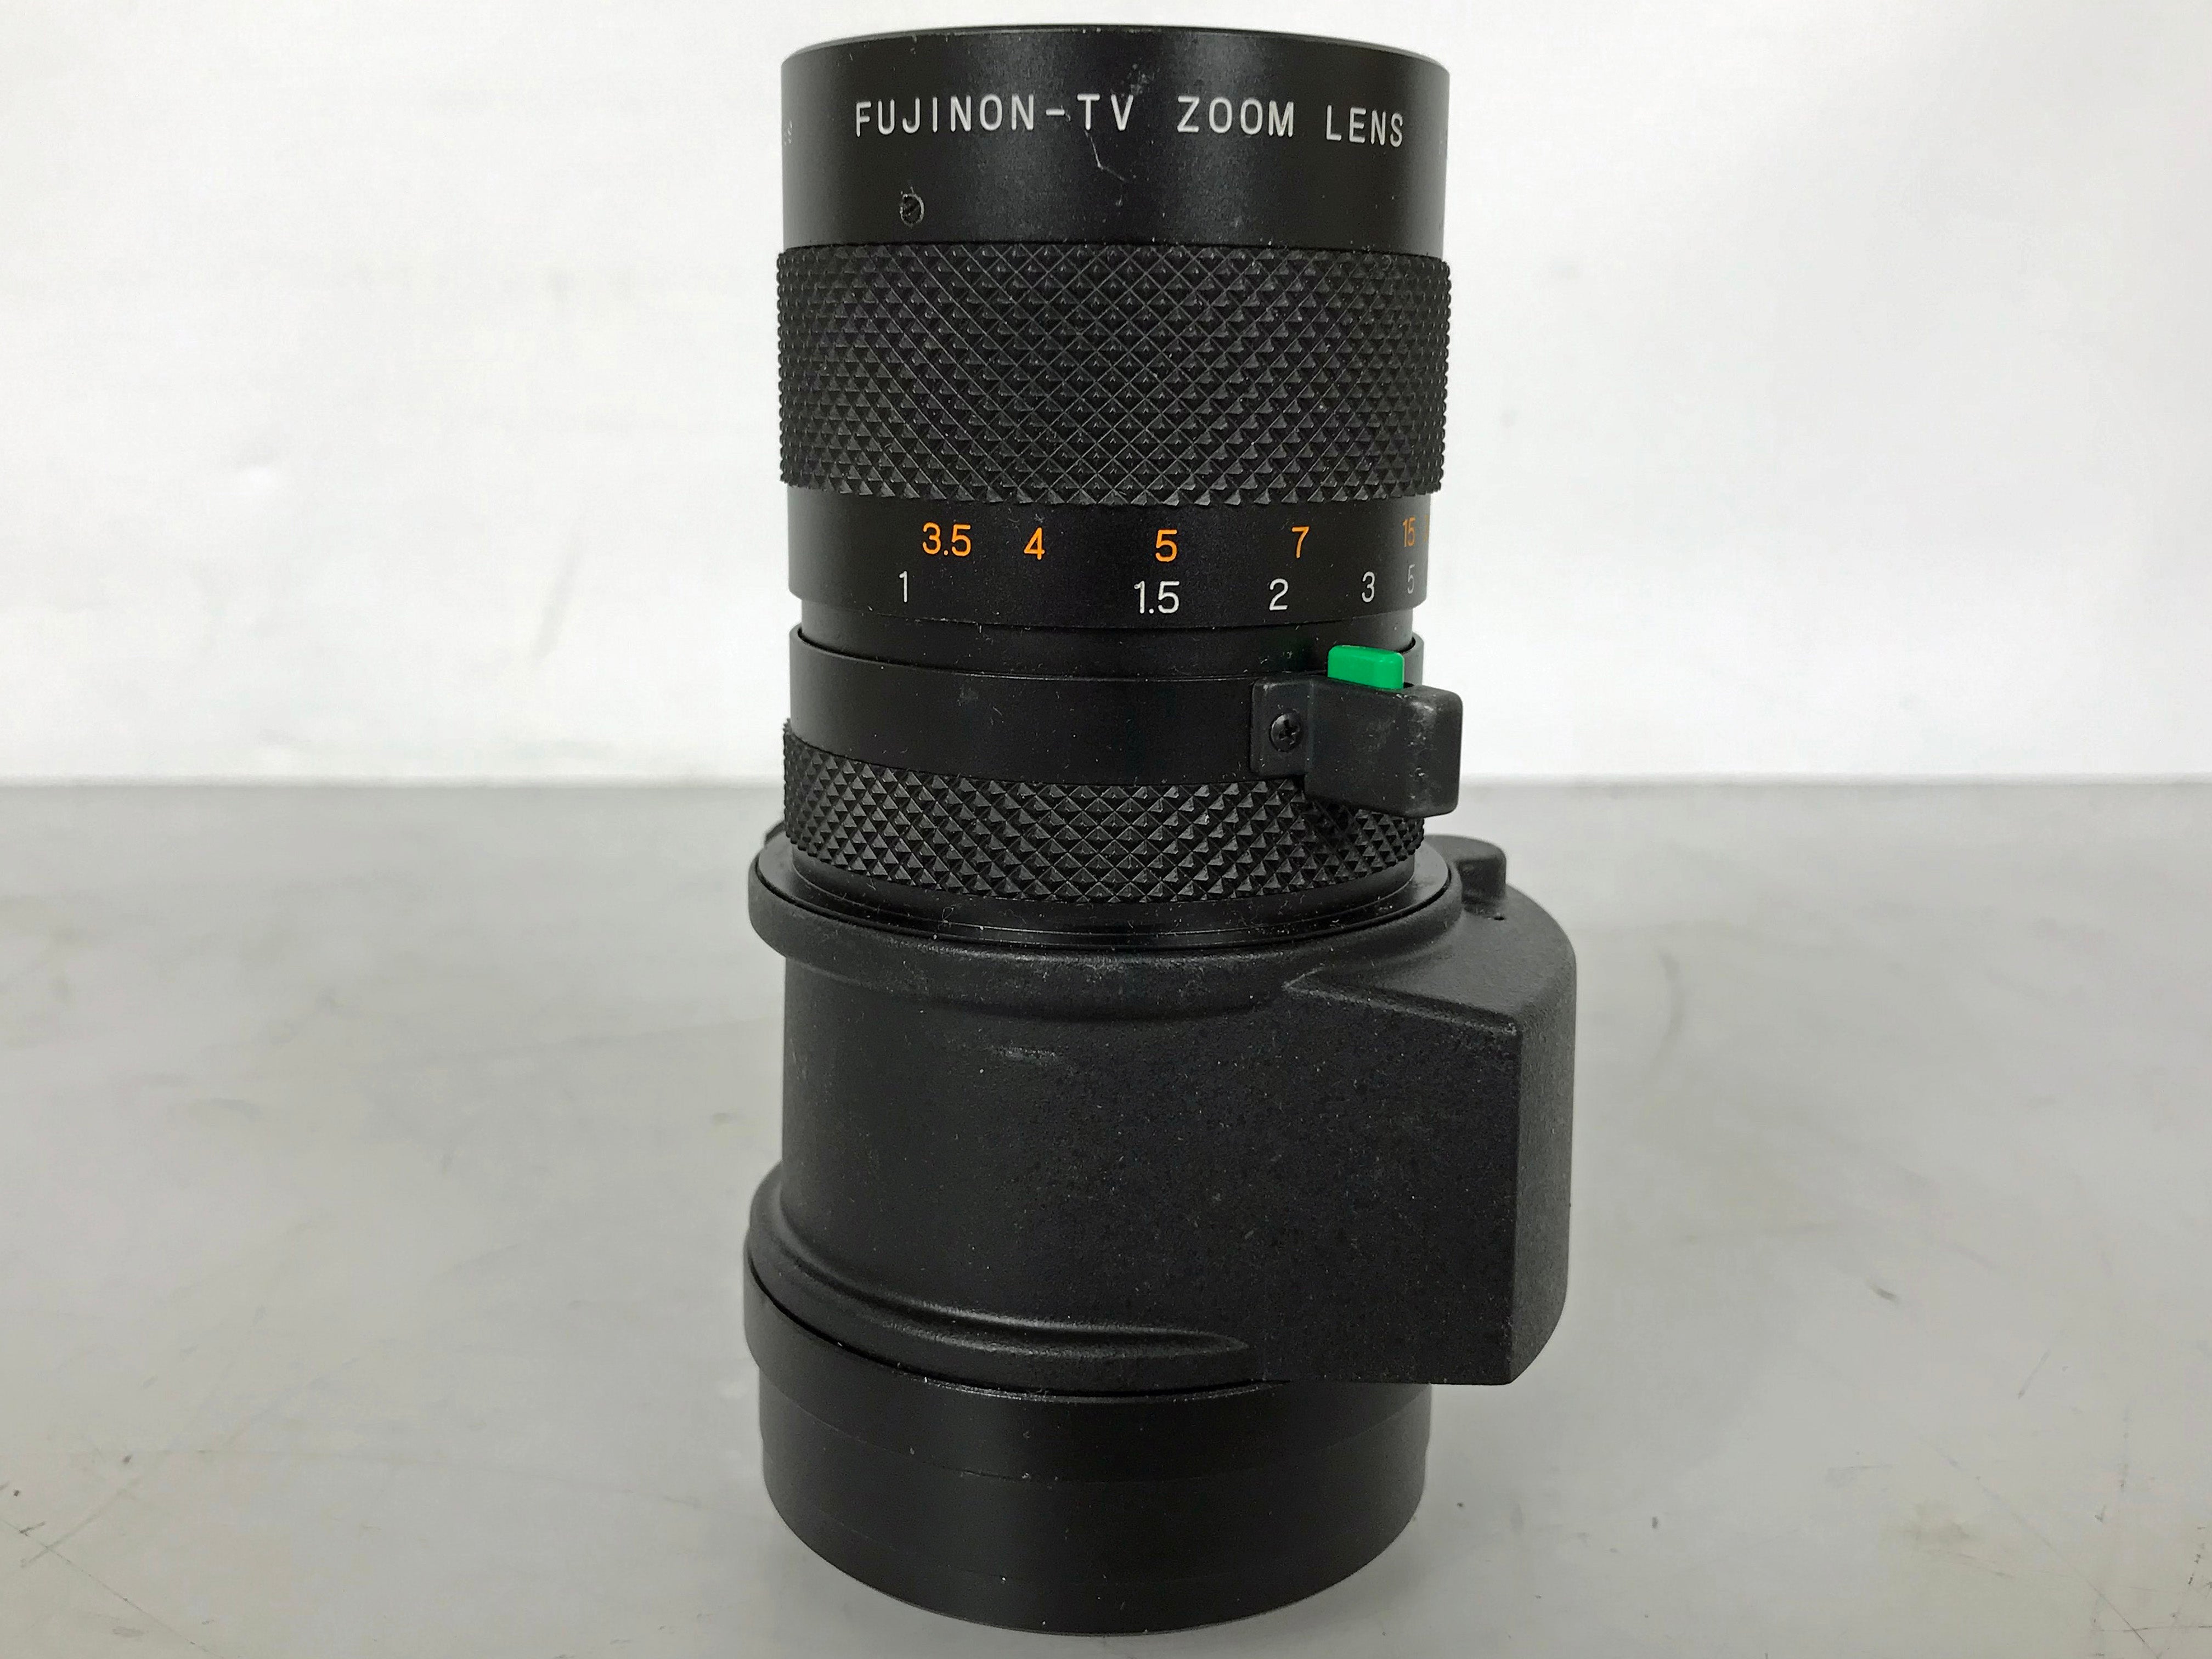 Fujinon H6X12.5DM 1 1.4/12.5-75mm C Mount TV Zoom Lens